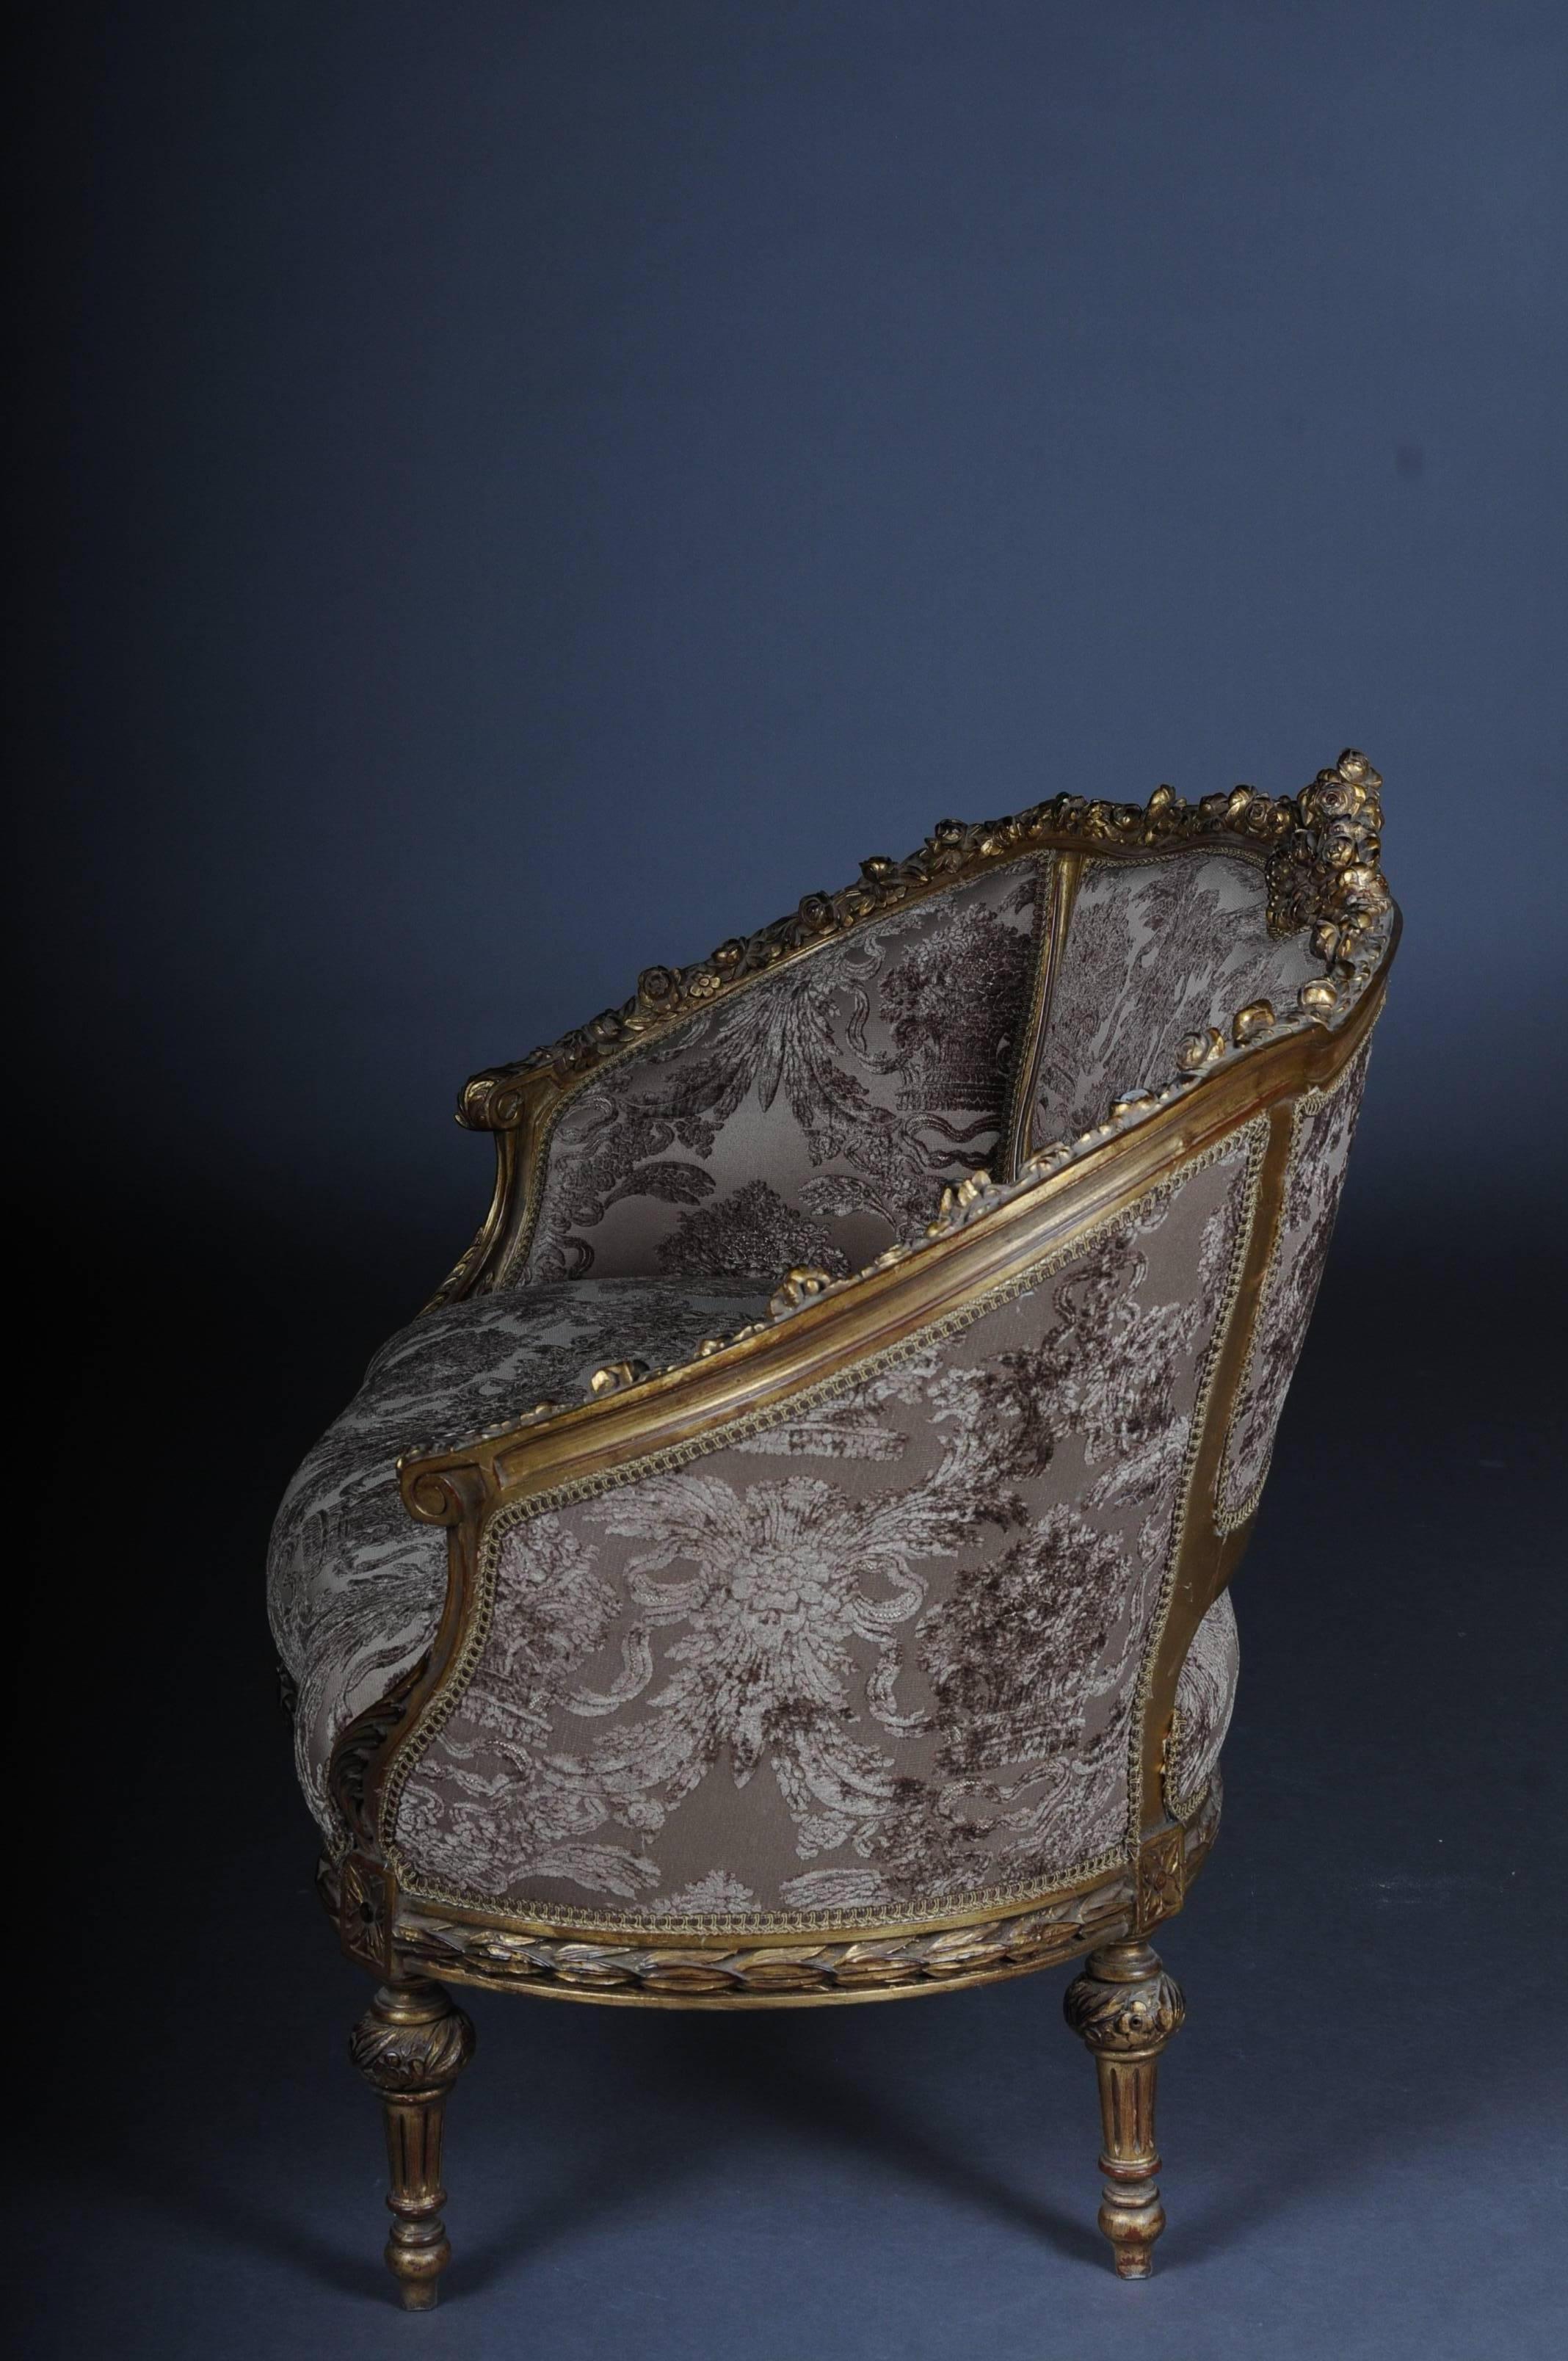 Decorative French Sofa, Canapé in Louis XVI Seize 1